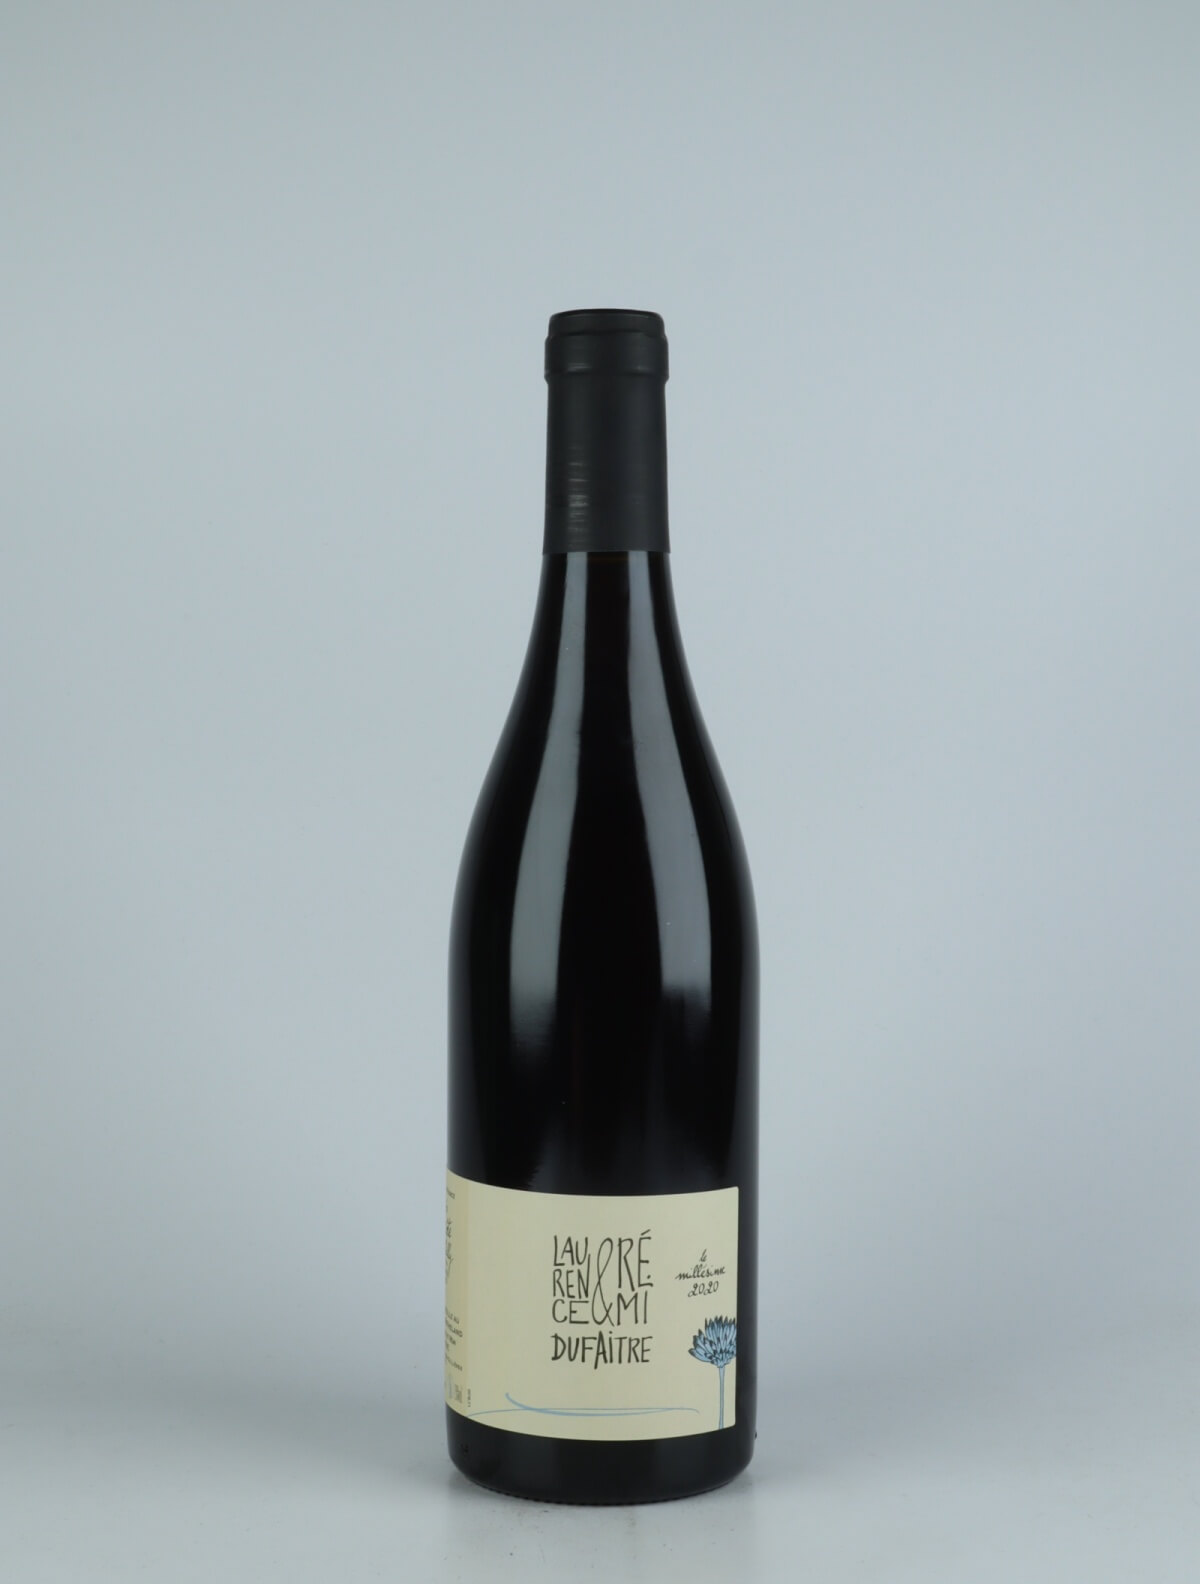 A bottle 2020 Côte de Brouilly Red wine from Laurence & Rémi Dufaitre, Beaujolais in France